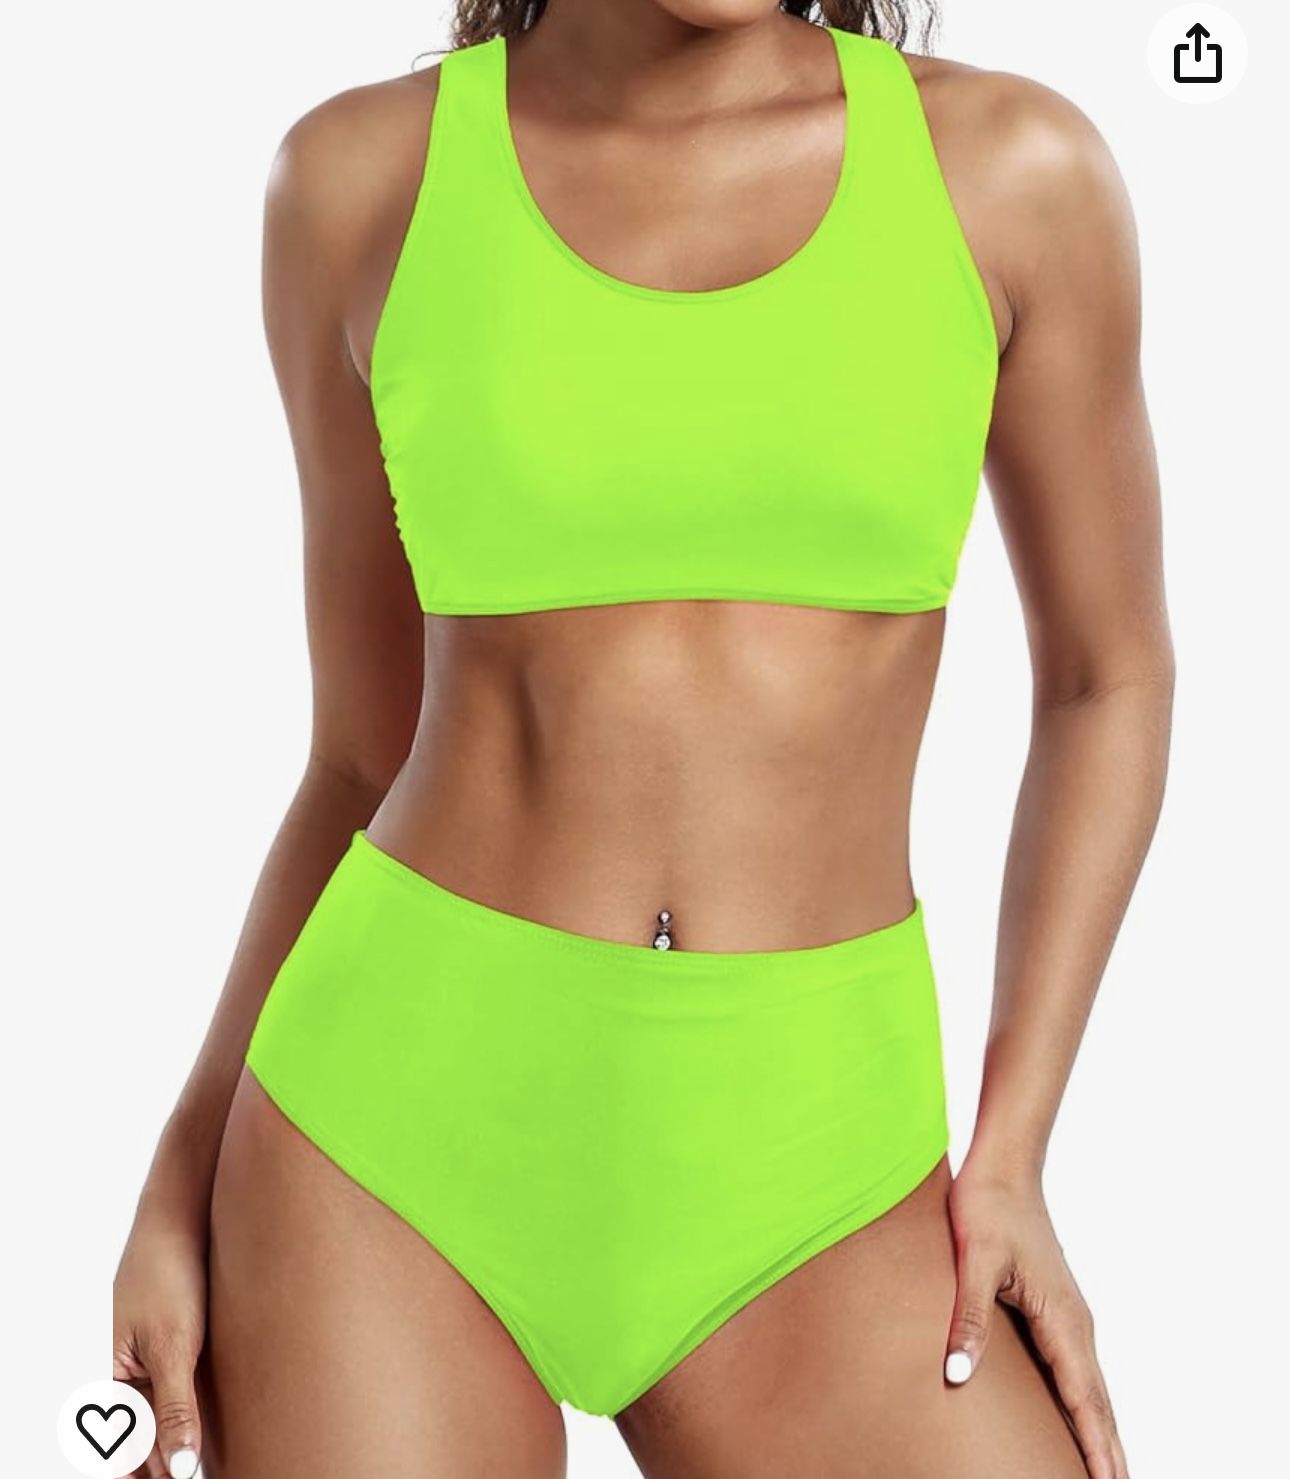 Holipick Neon Green Bikini Size L